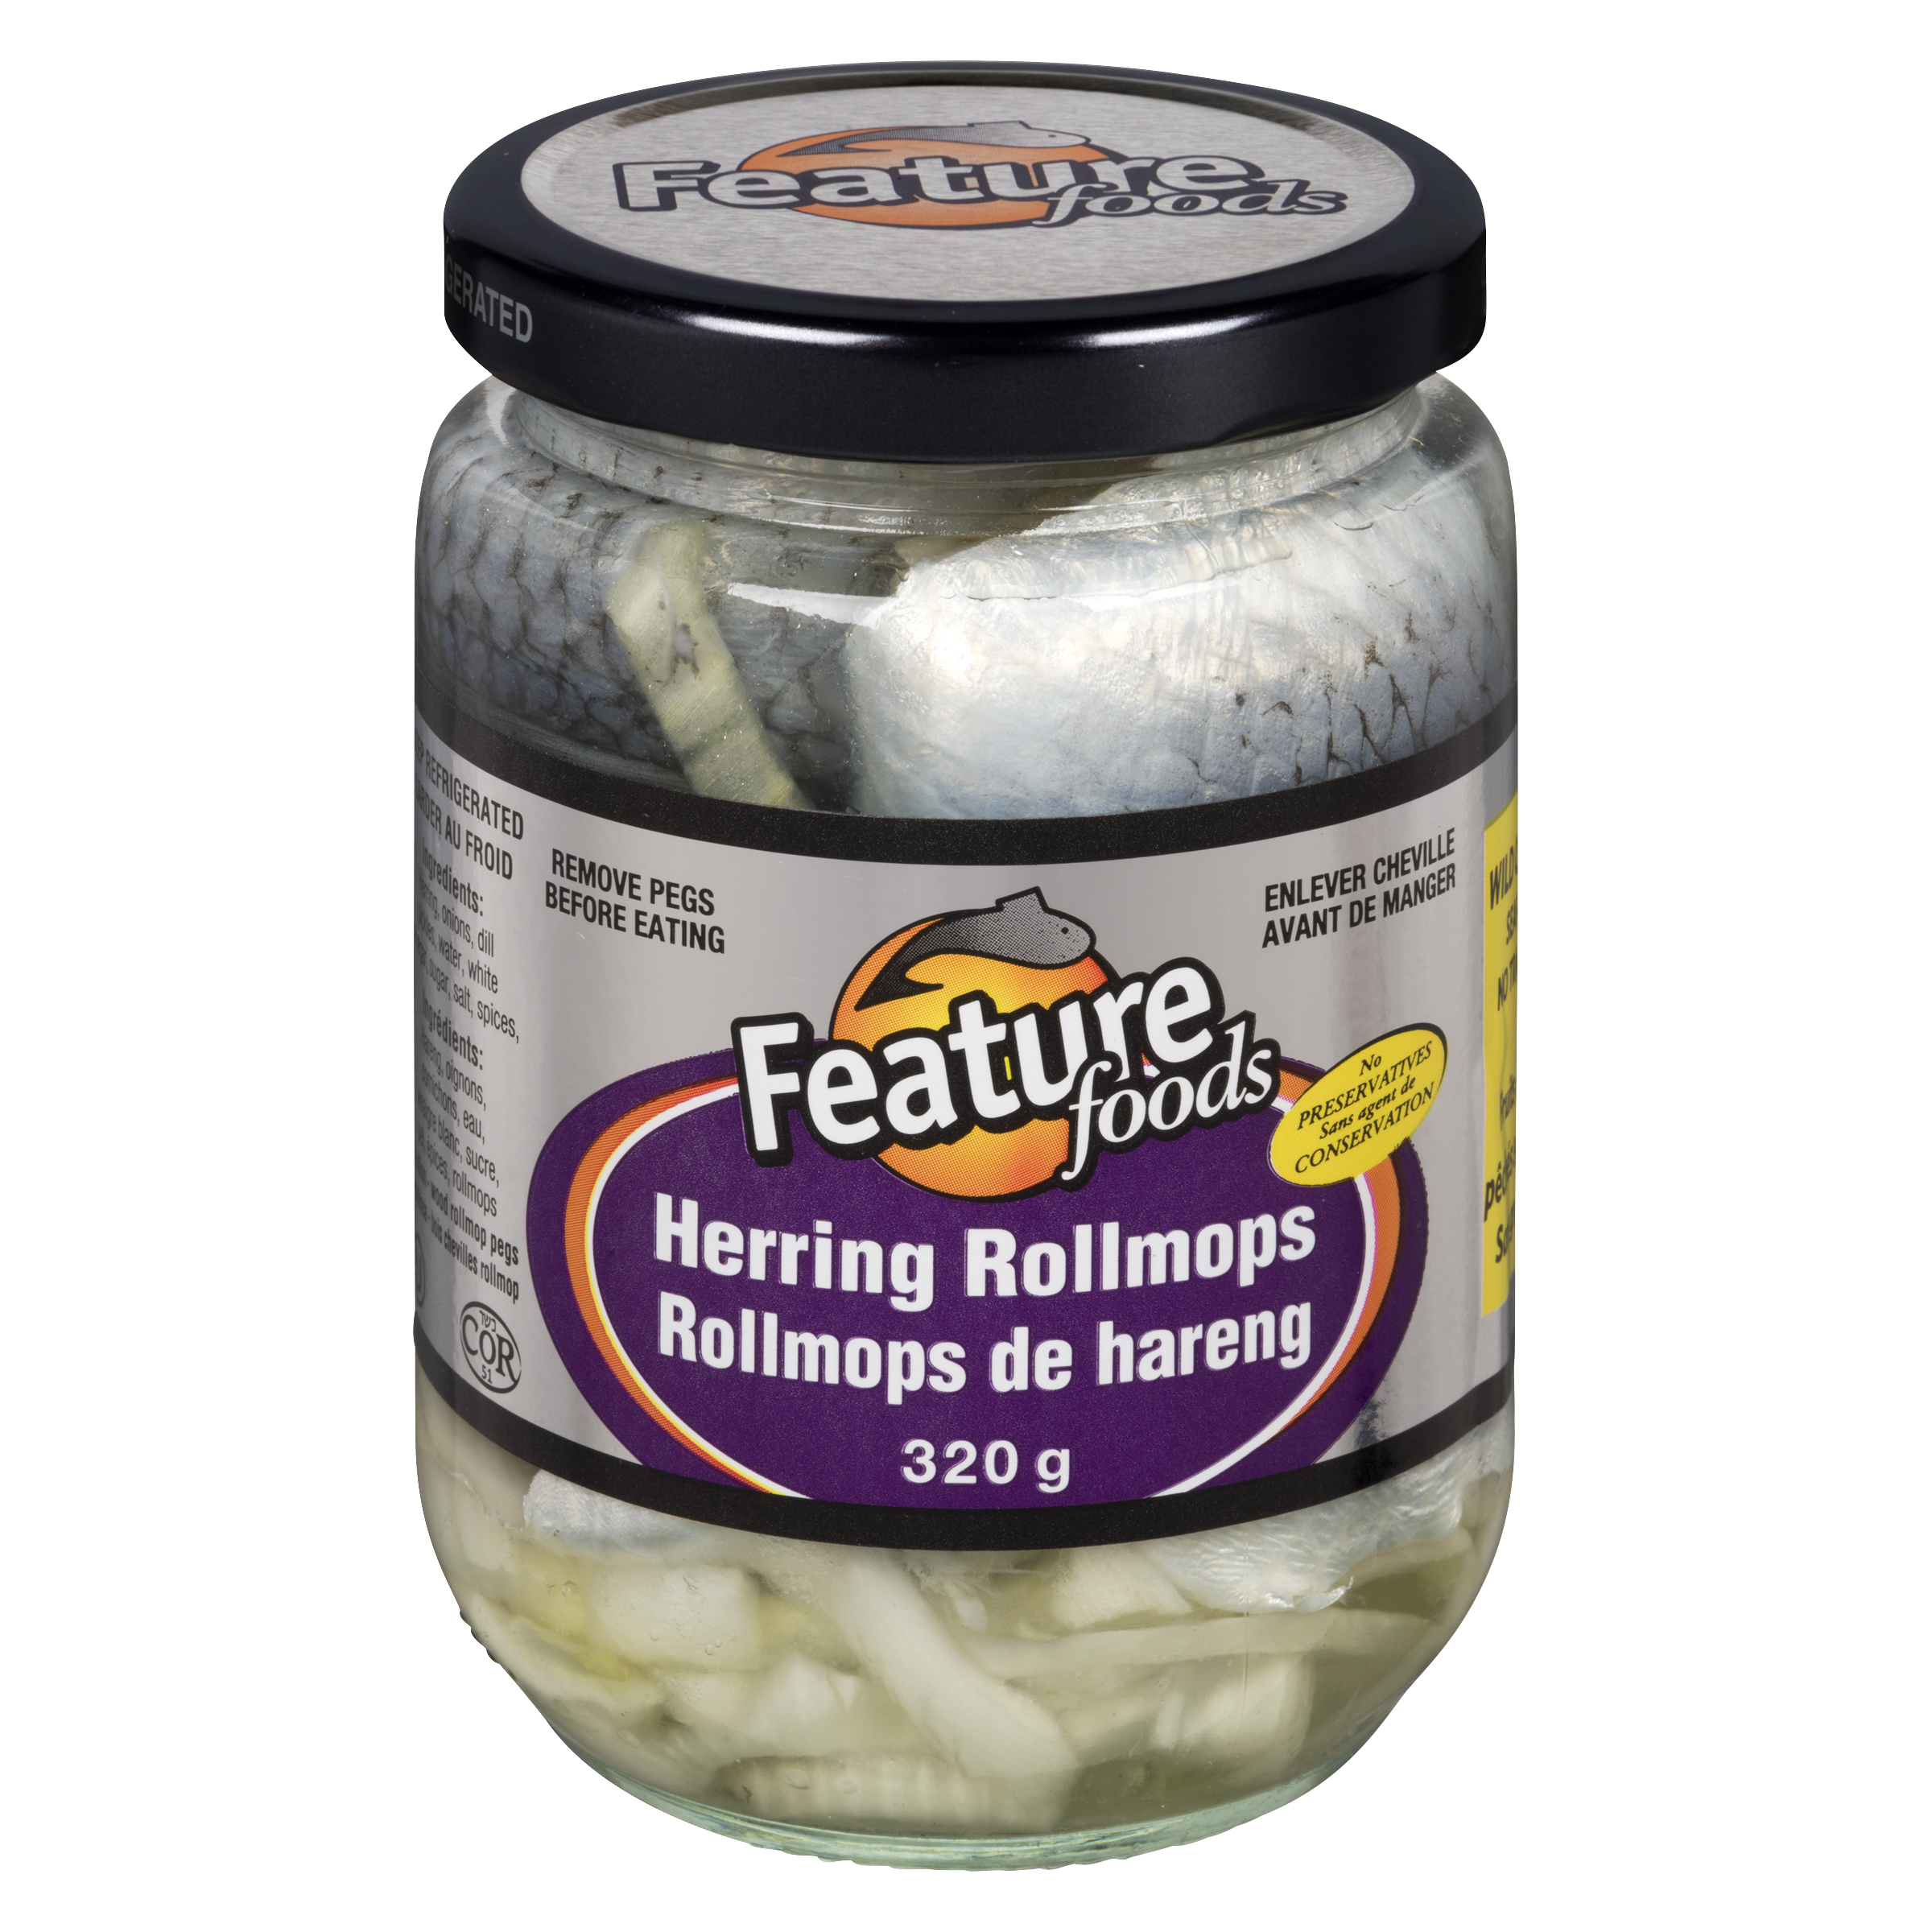 Feature Foods Herring Rollmops 320g Jar